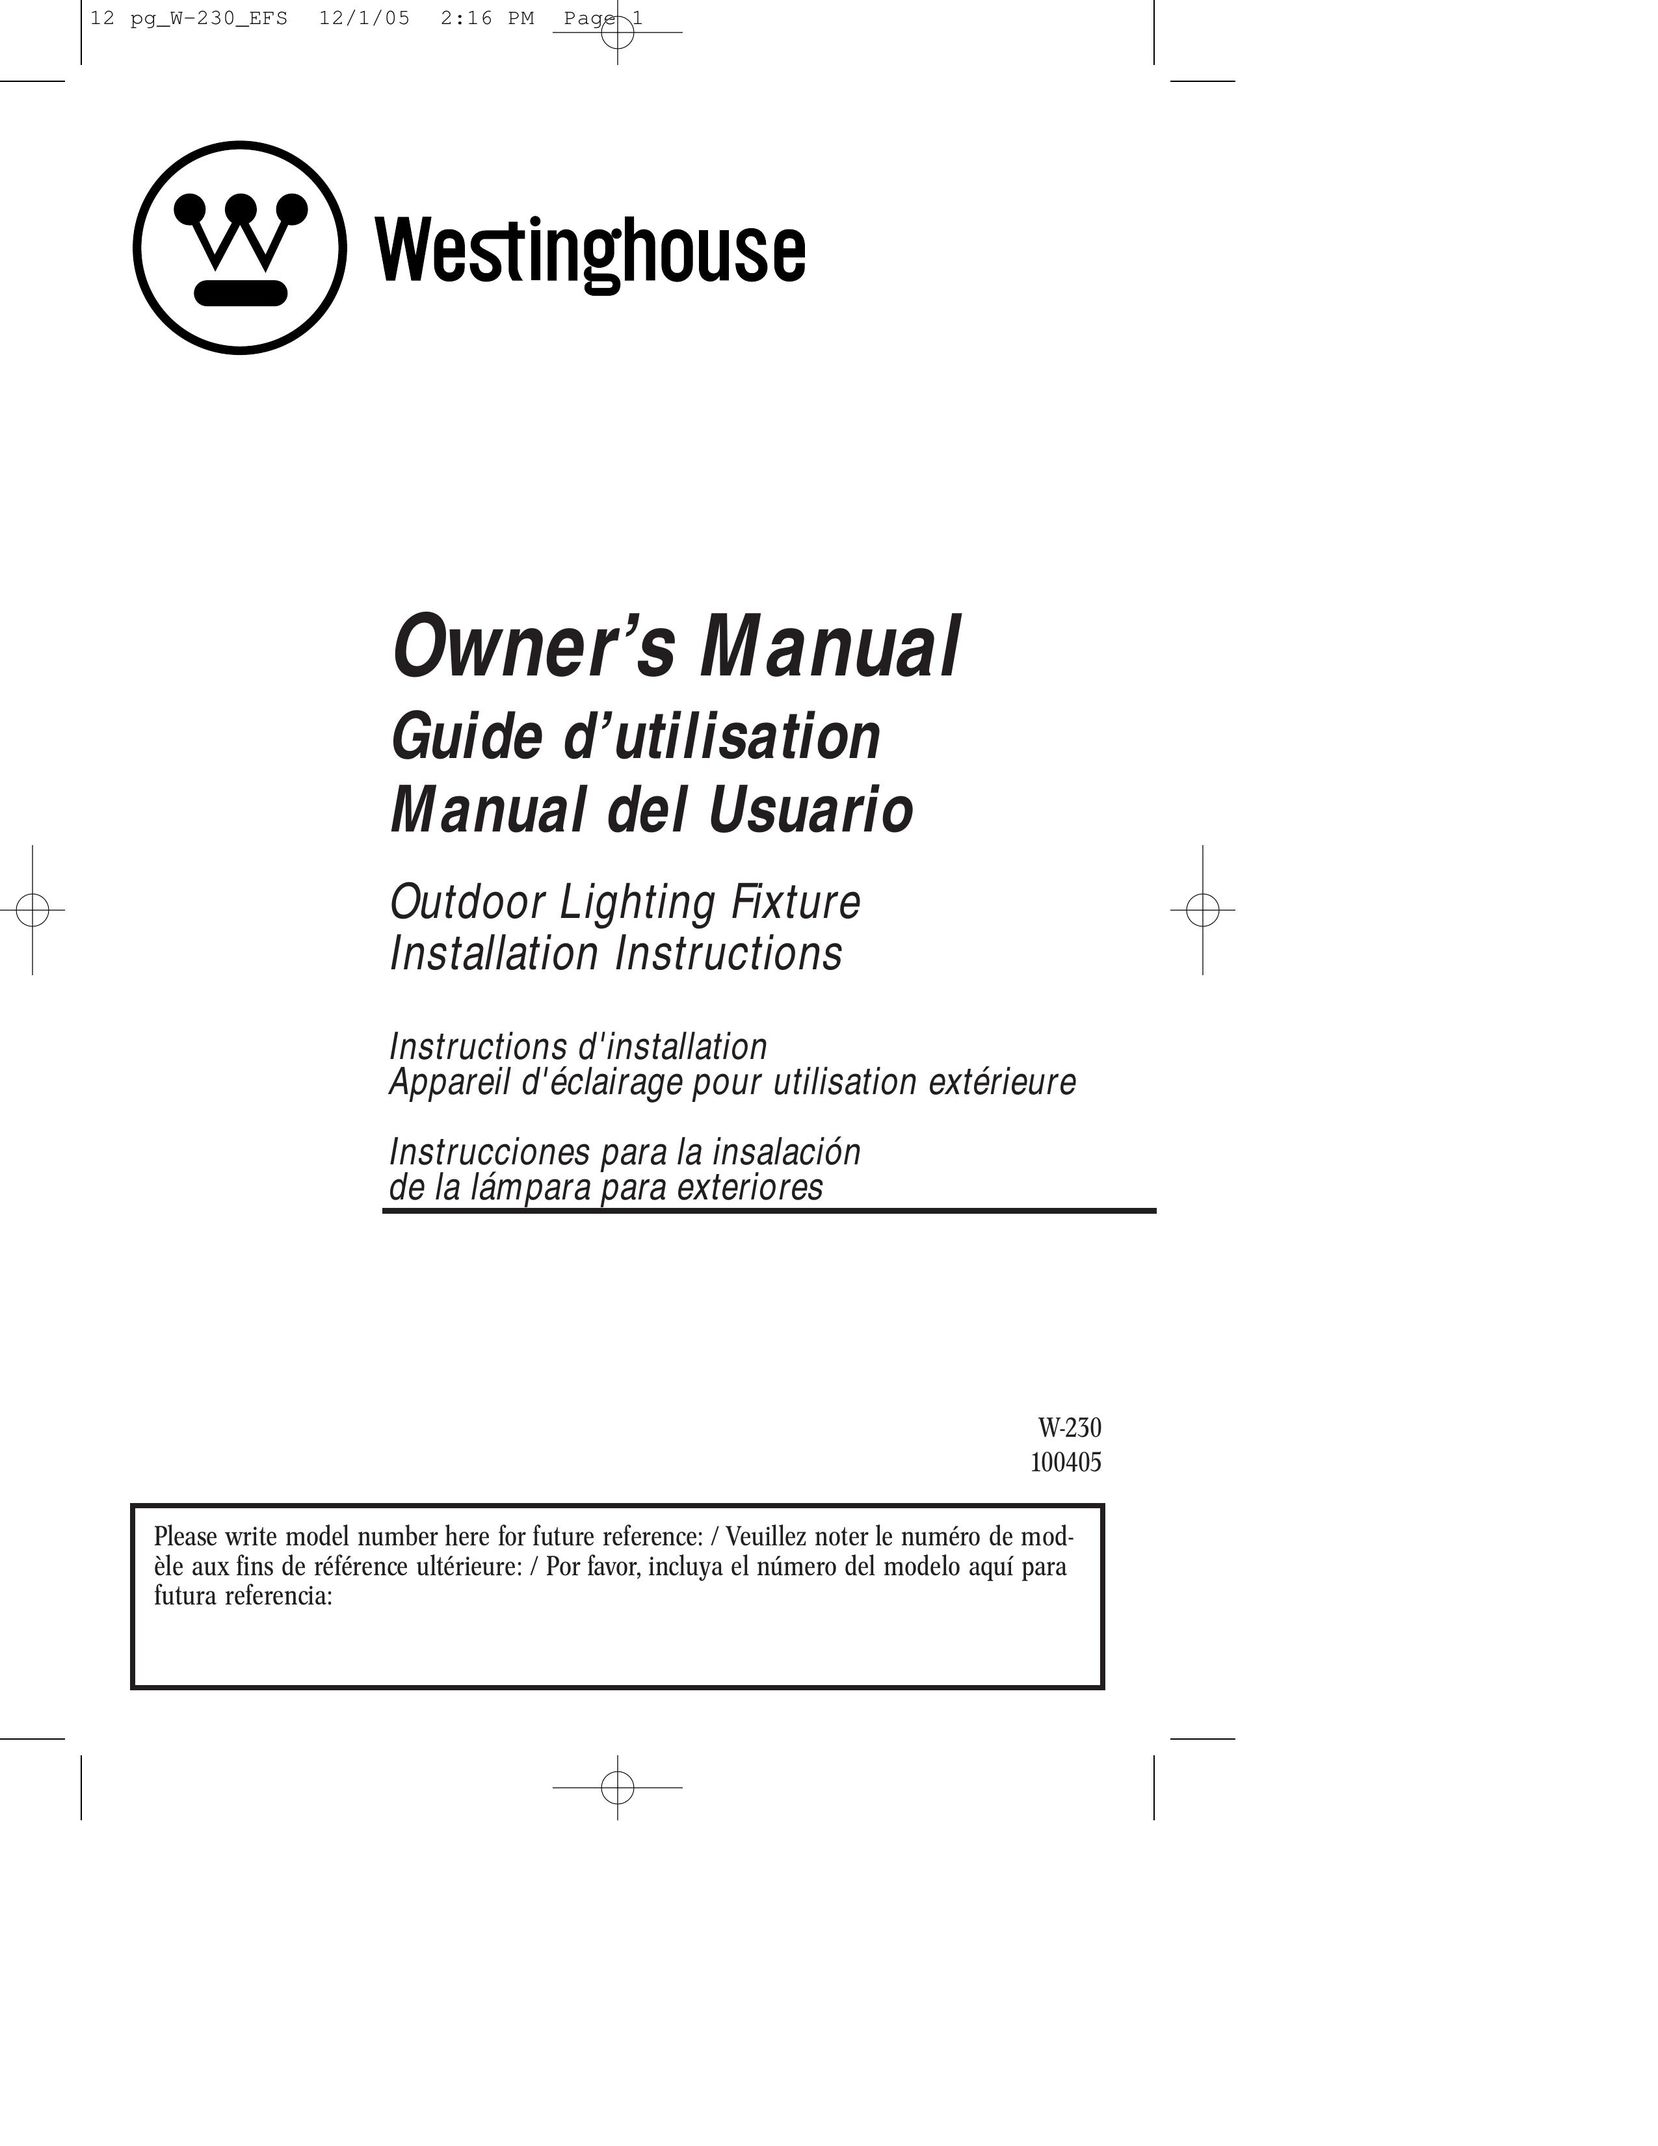 Westinghouse 100405 Indoor Furnishings User Manual